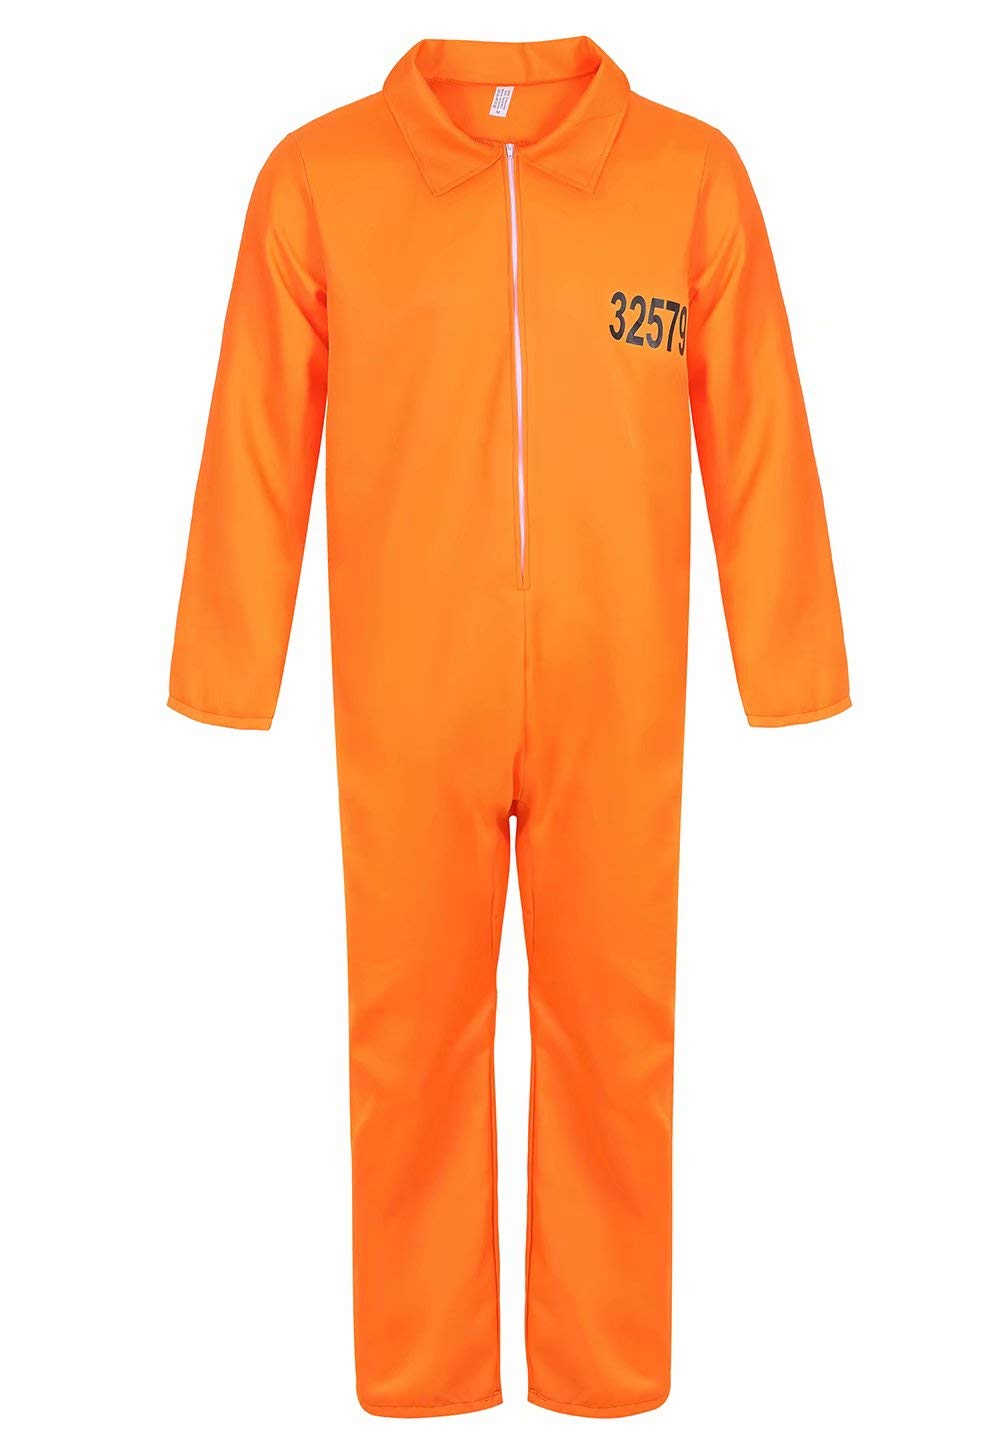 Josamogre Geflüchteter Gefangener Kostüm Overall Herren Gefangenenkostüm Orange Halloween Adult Cosplay m